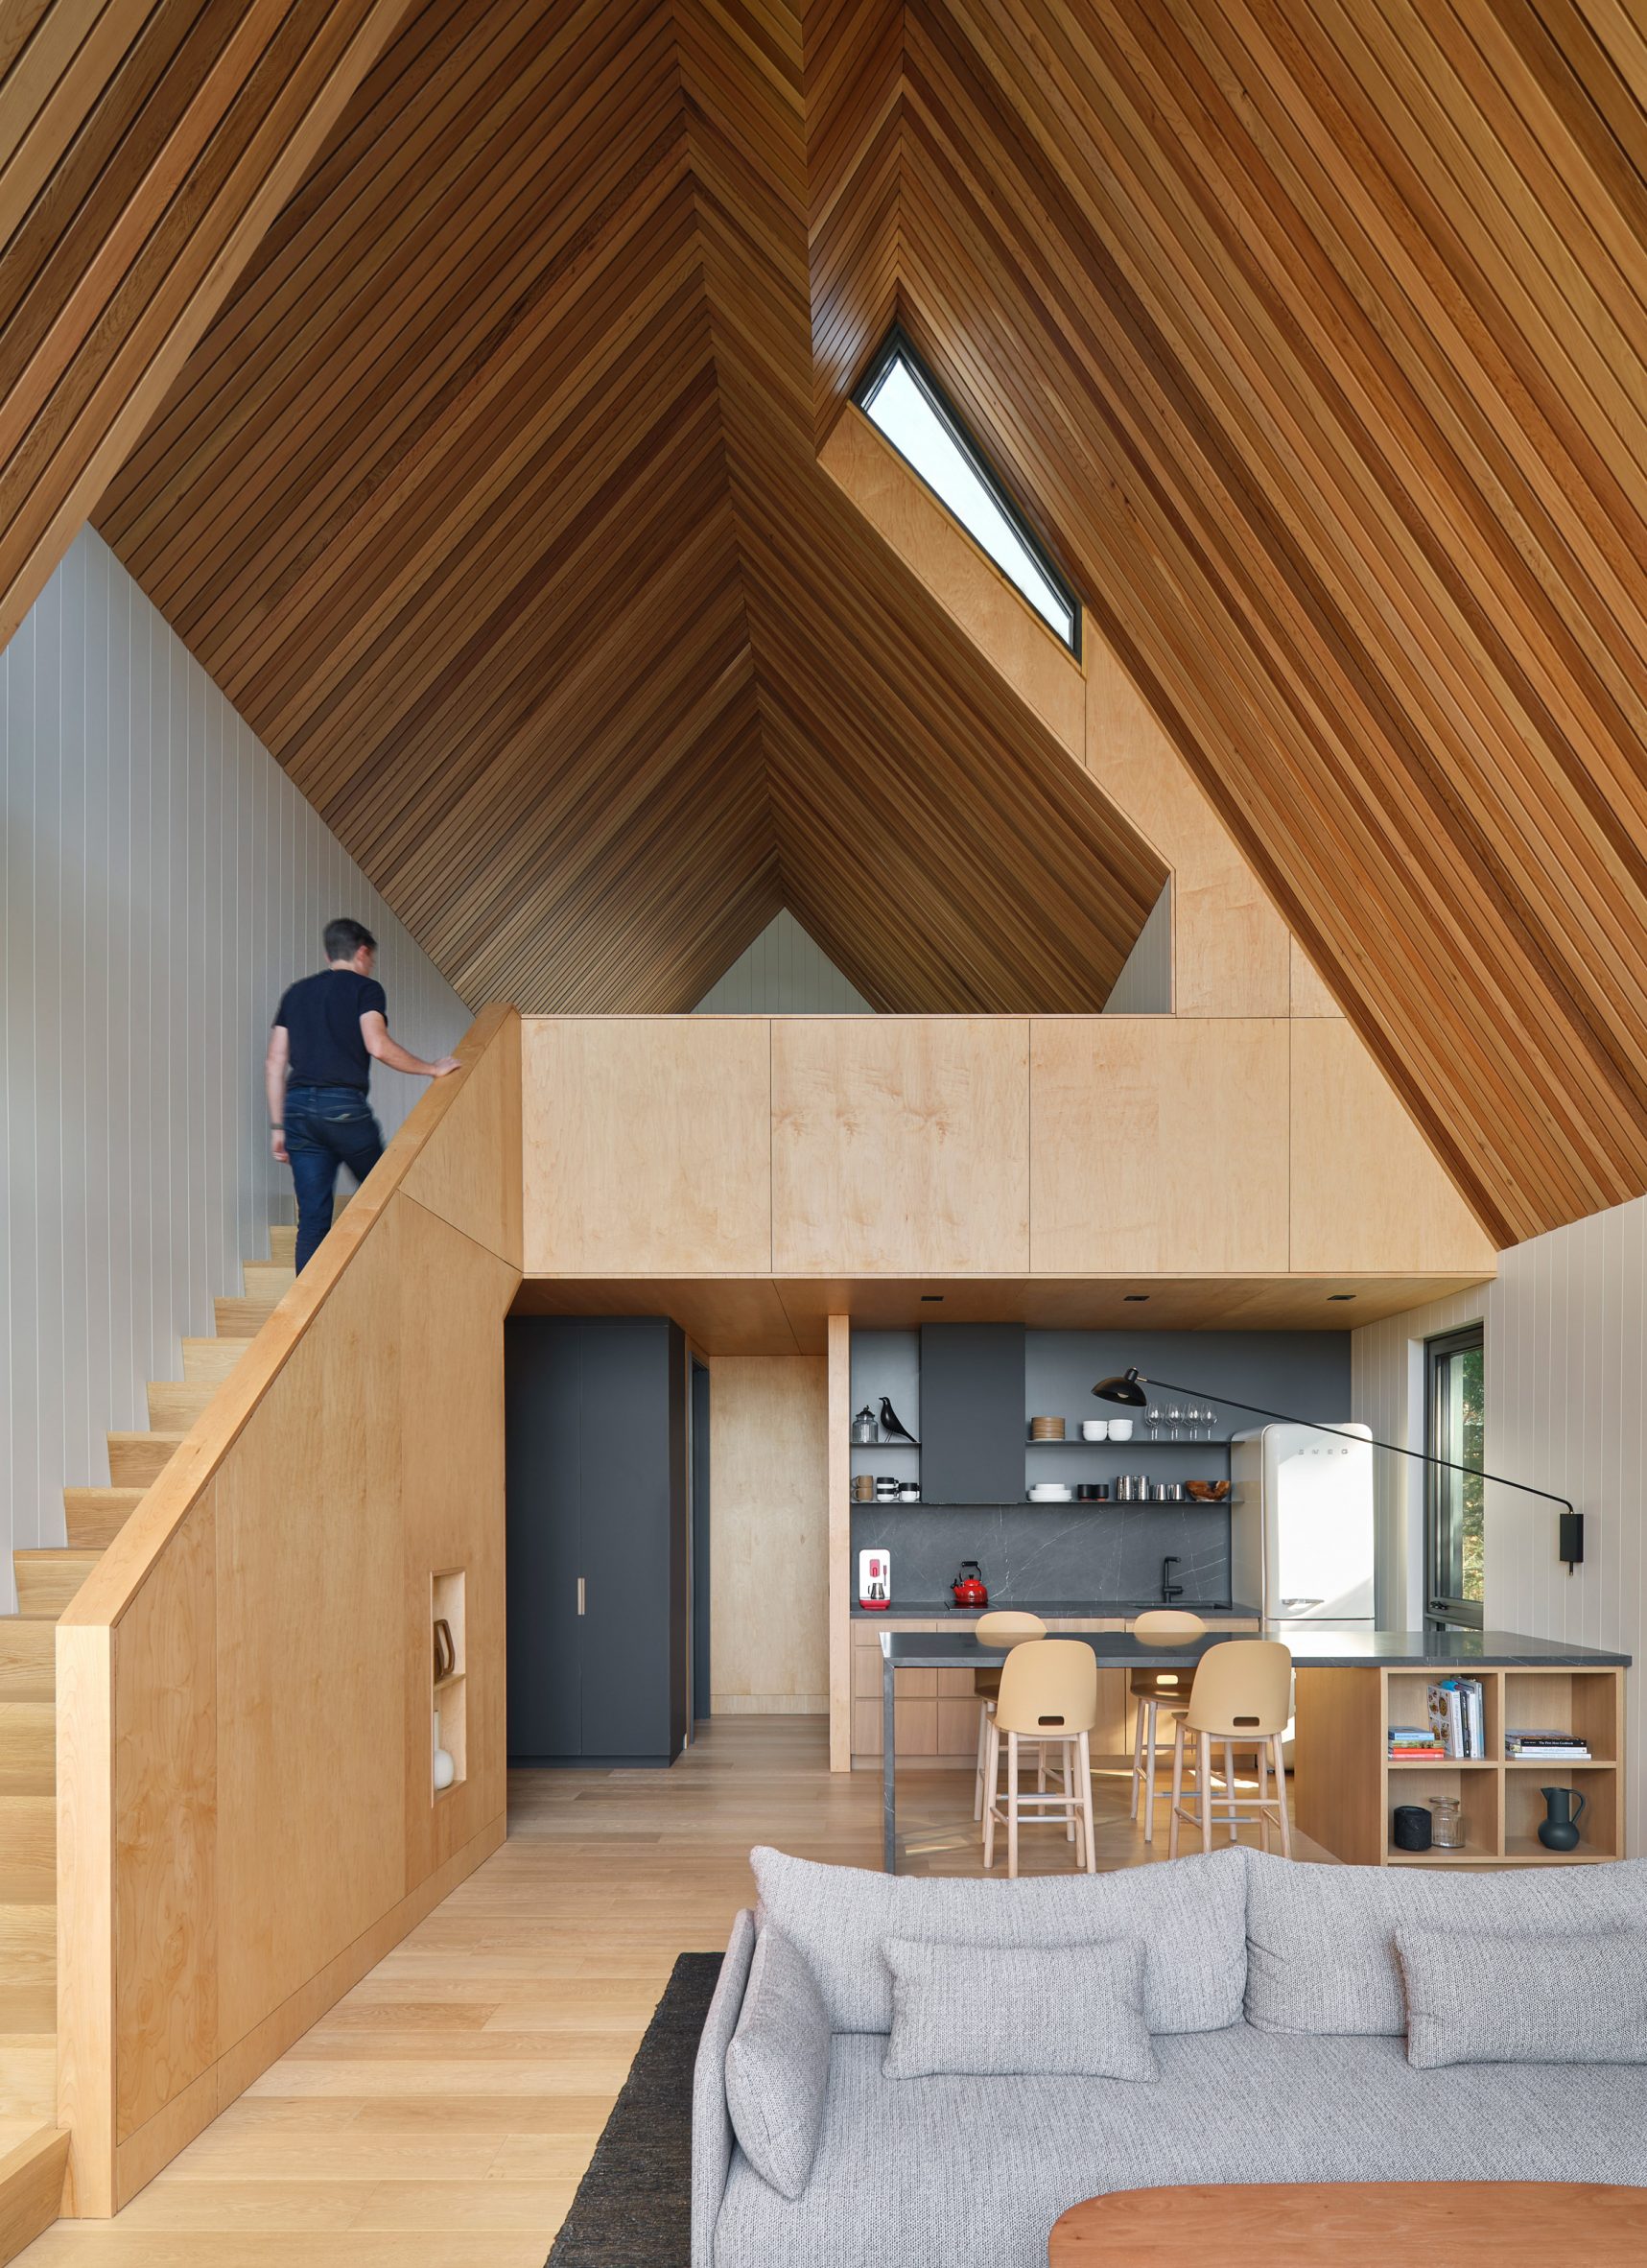 Wood-clad interior